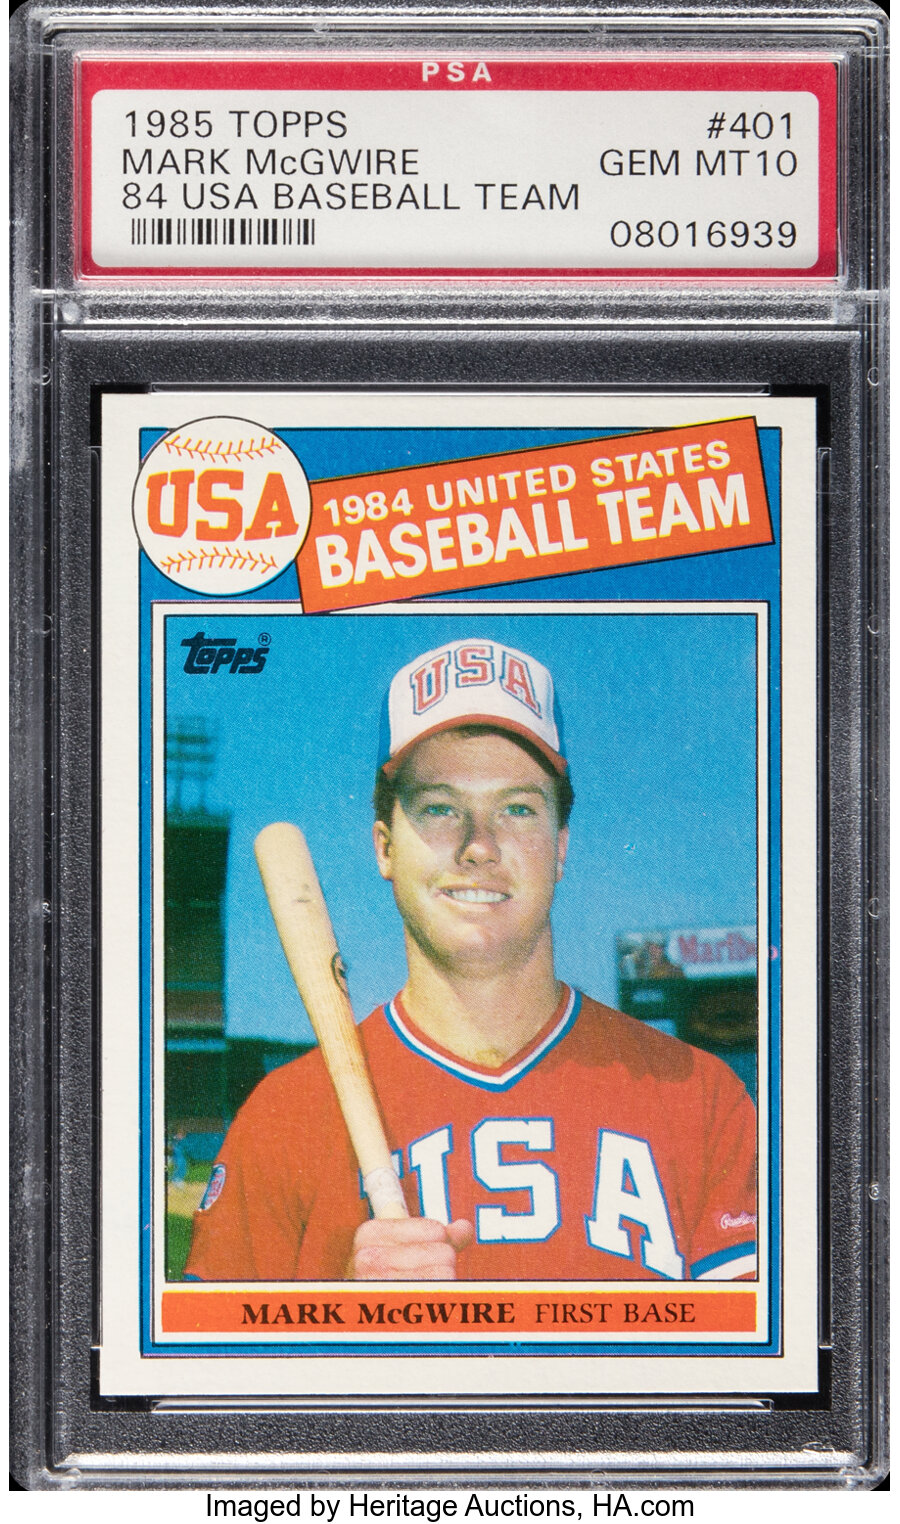 1985 Topps Mark McGwire (1984 USA Baseball Team) Rookie #401 PSA Gem Mint 10